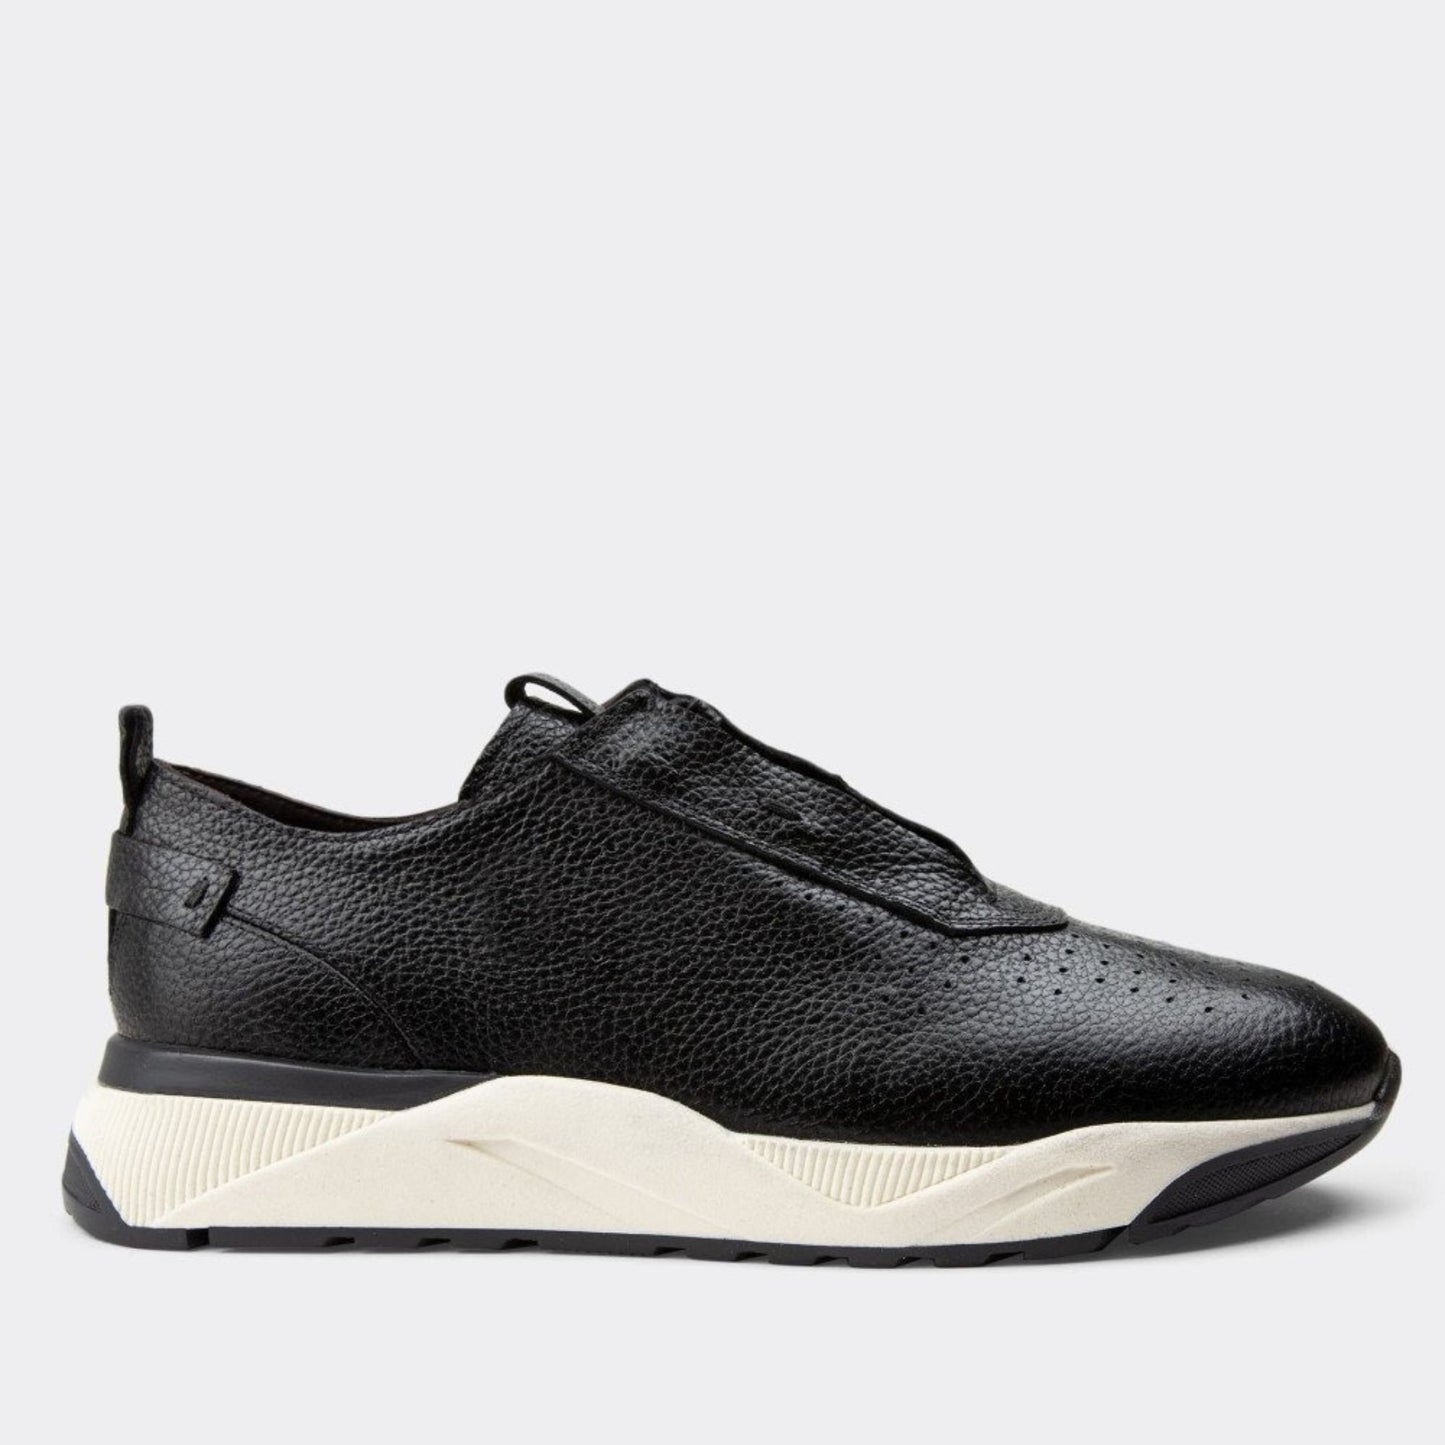 Madasat Black Sneaker Sport Shoes - 731 |